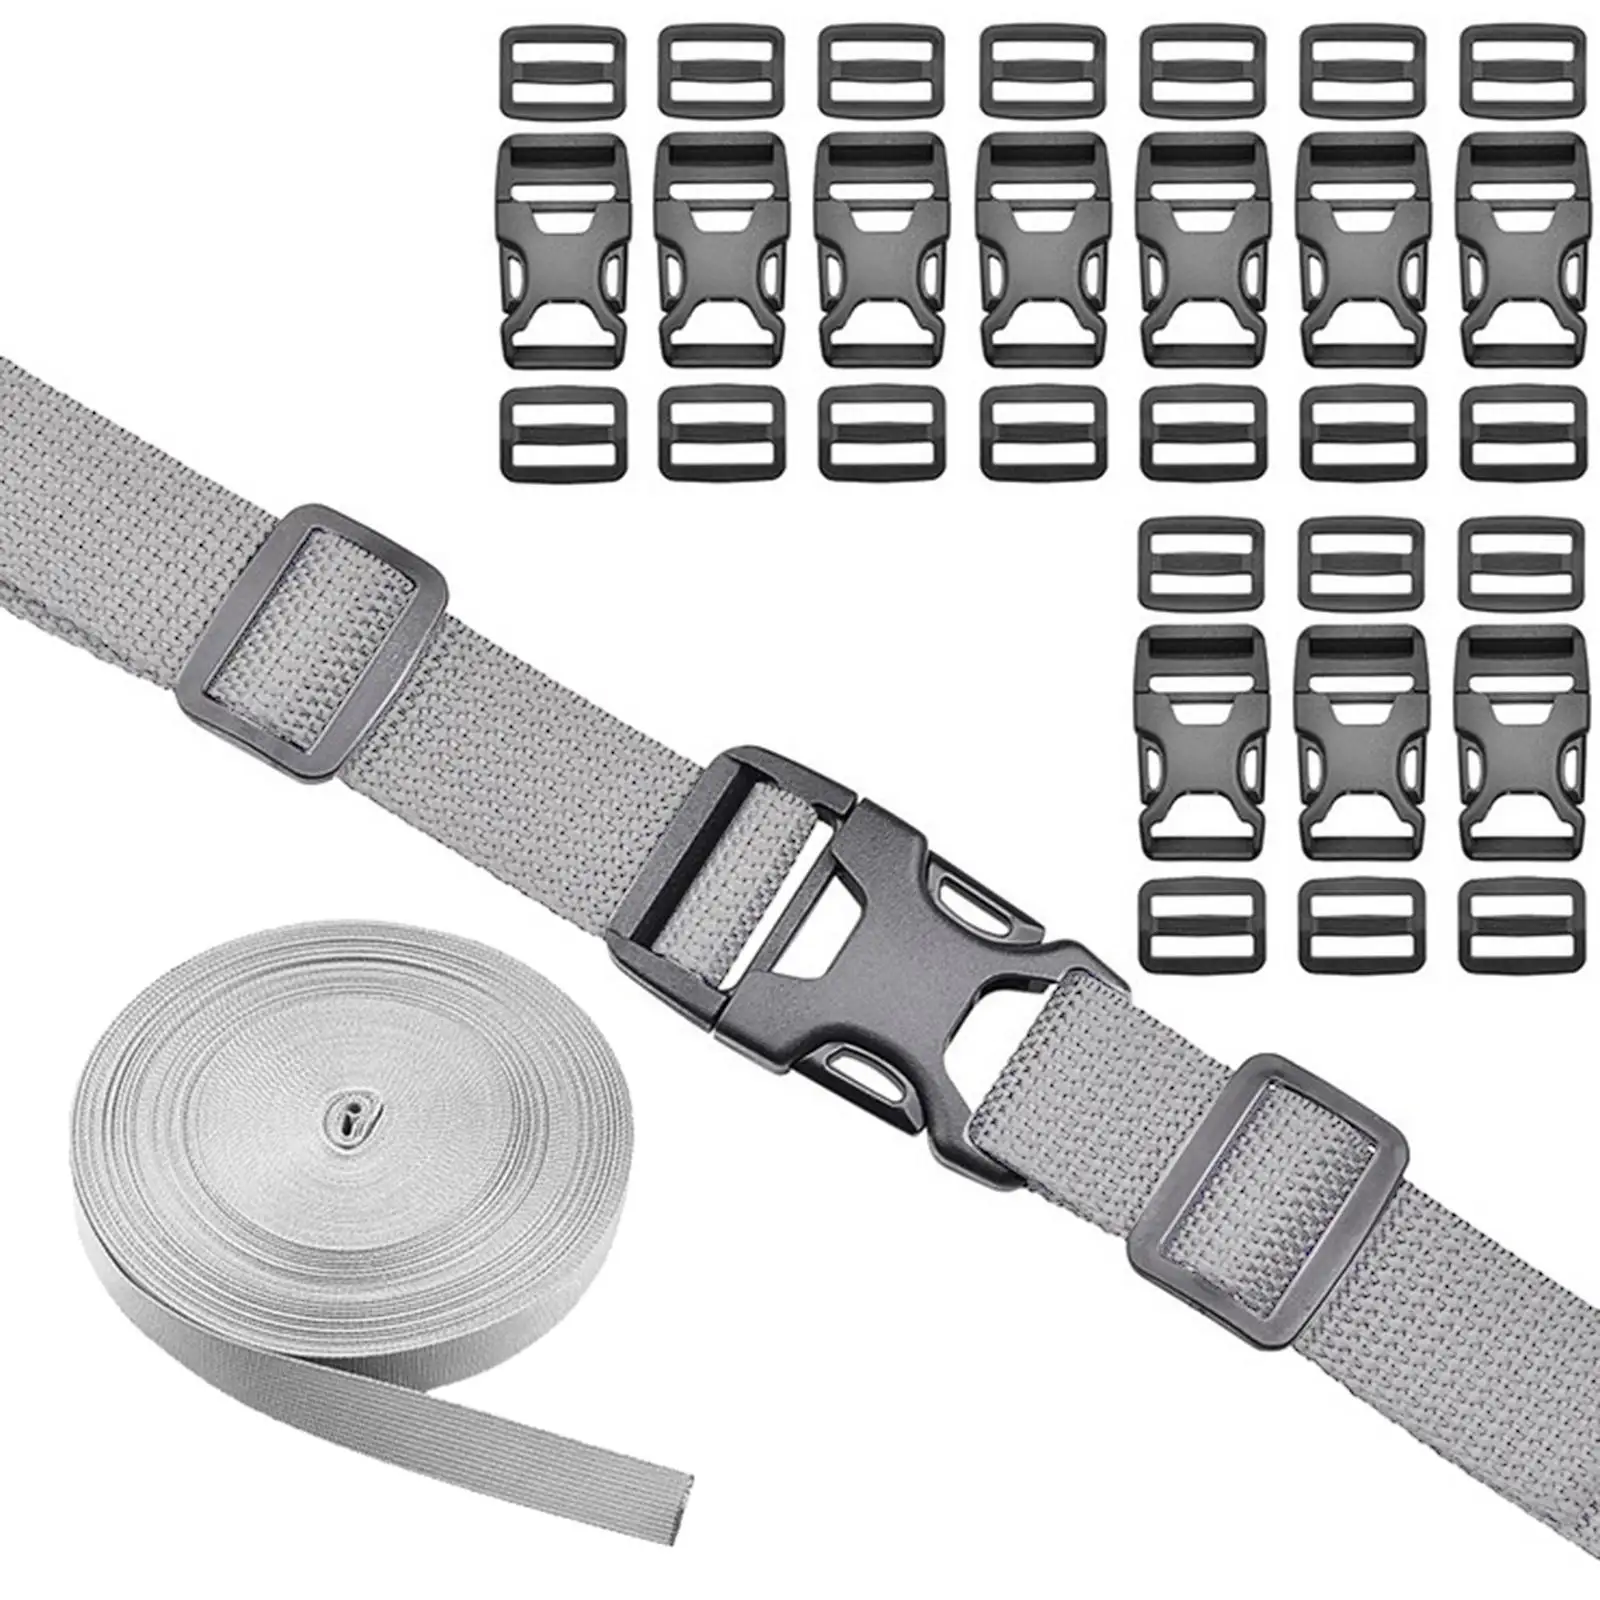 Adjustable Tie Down Straps, Lashing Straps, Adjustable Buckle Tie-Down Straps for Motorcycle, Cargo, Truck,Trailer, Luggage